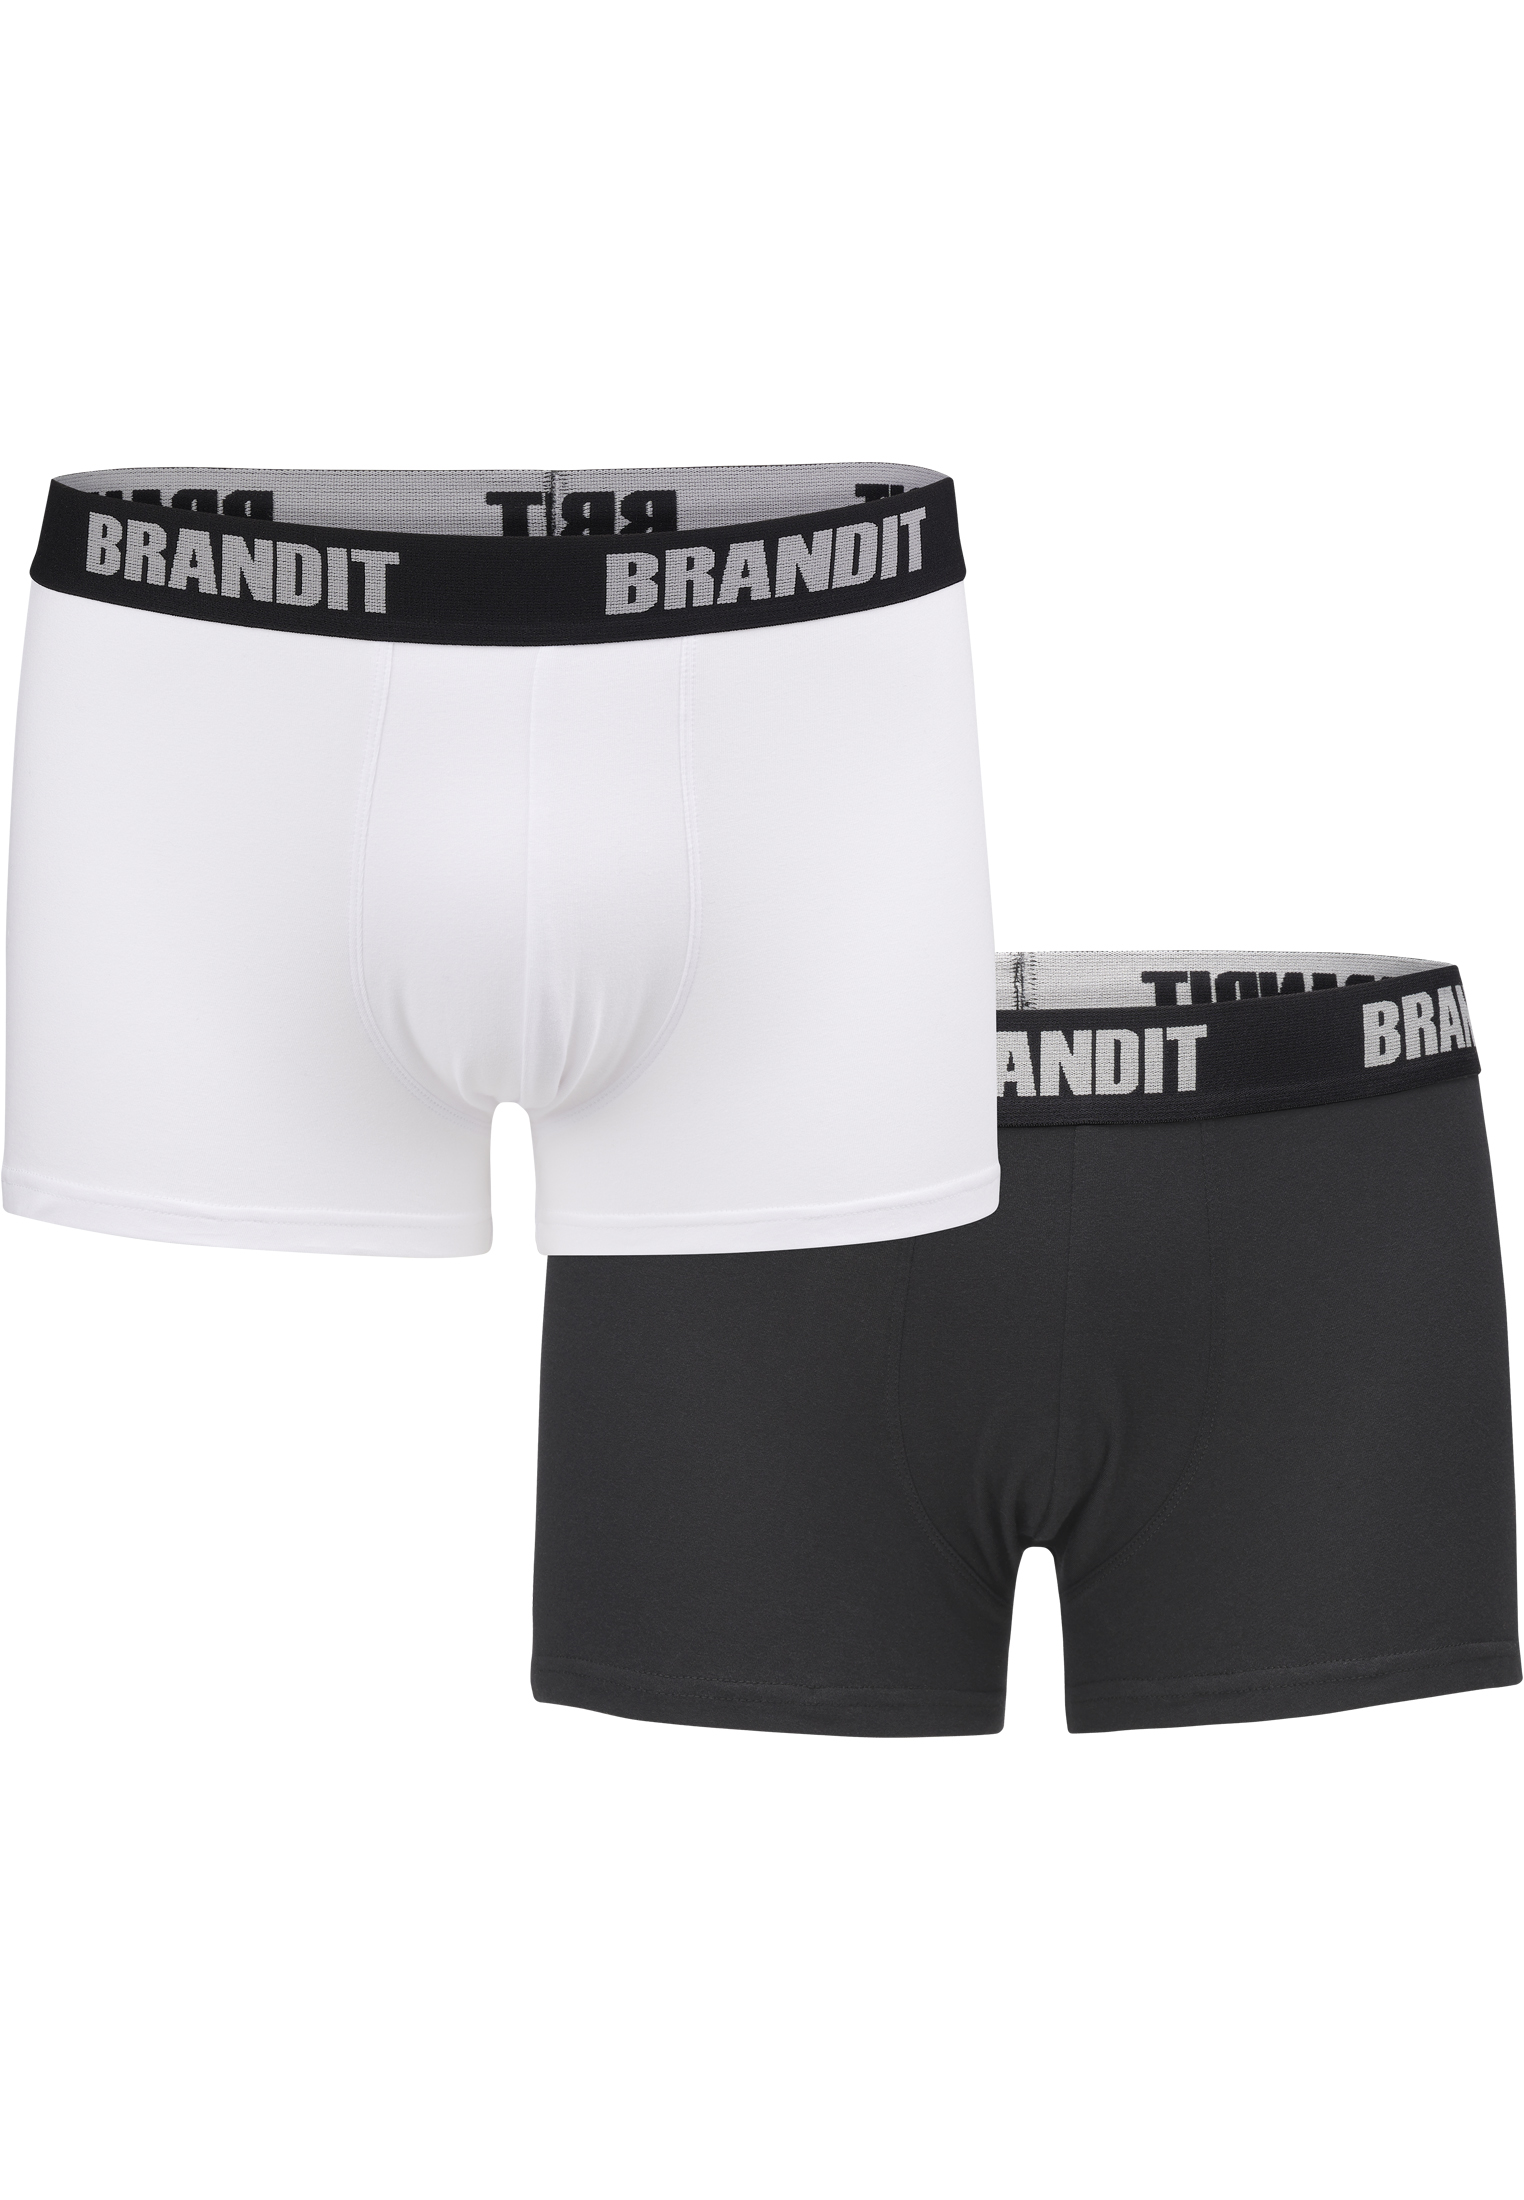 Underwear Boxershorts Logo 2er Pack in Farbe swedish camo